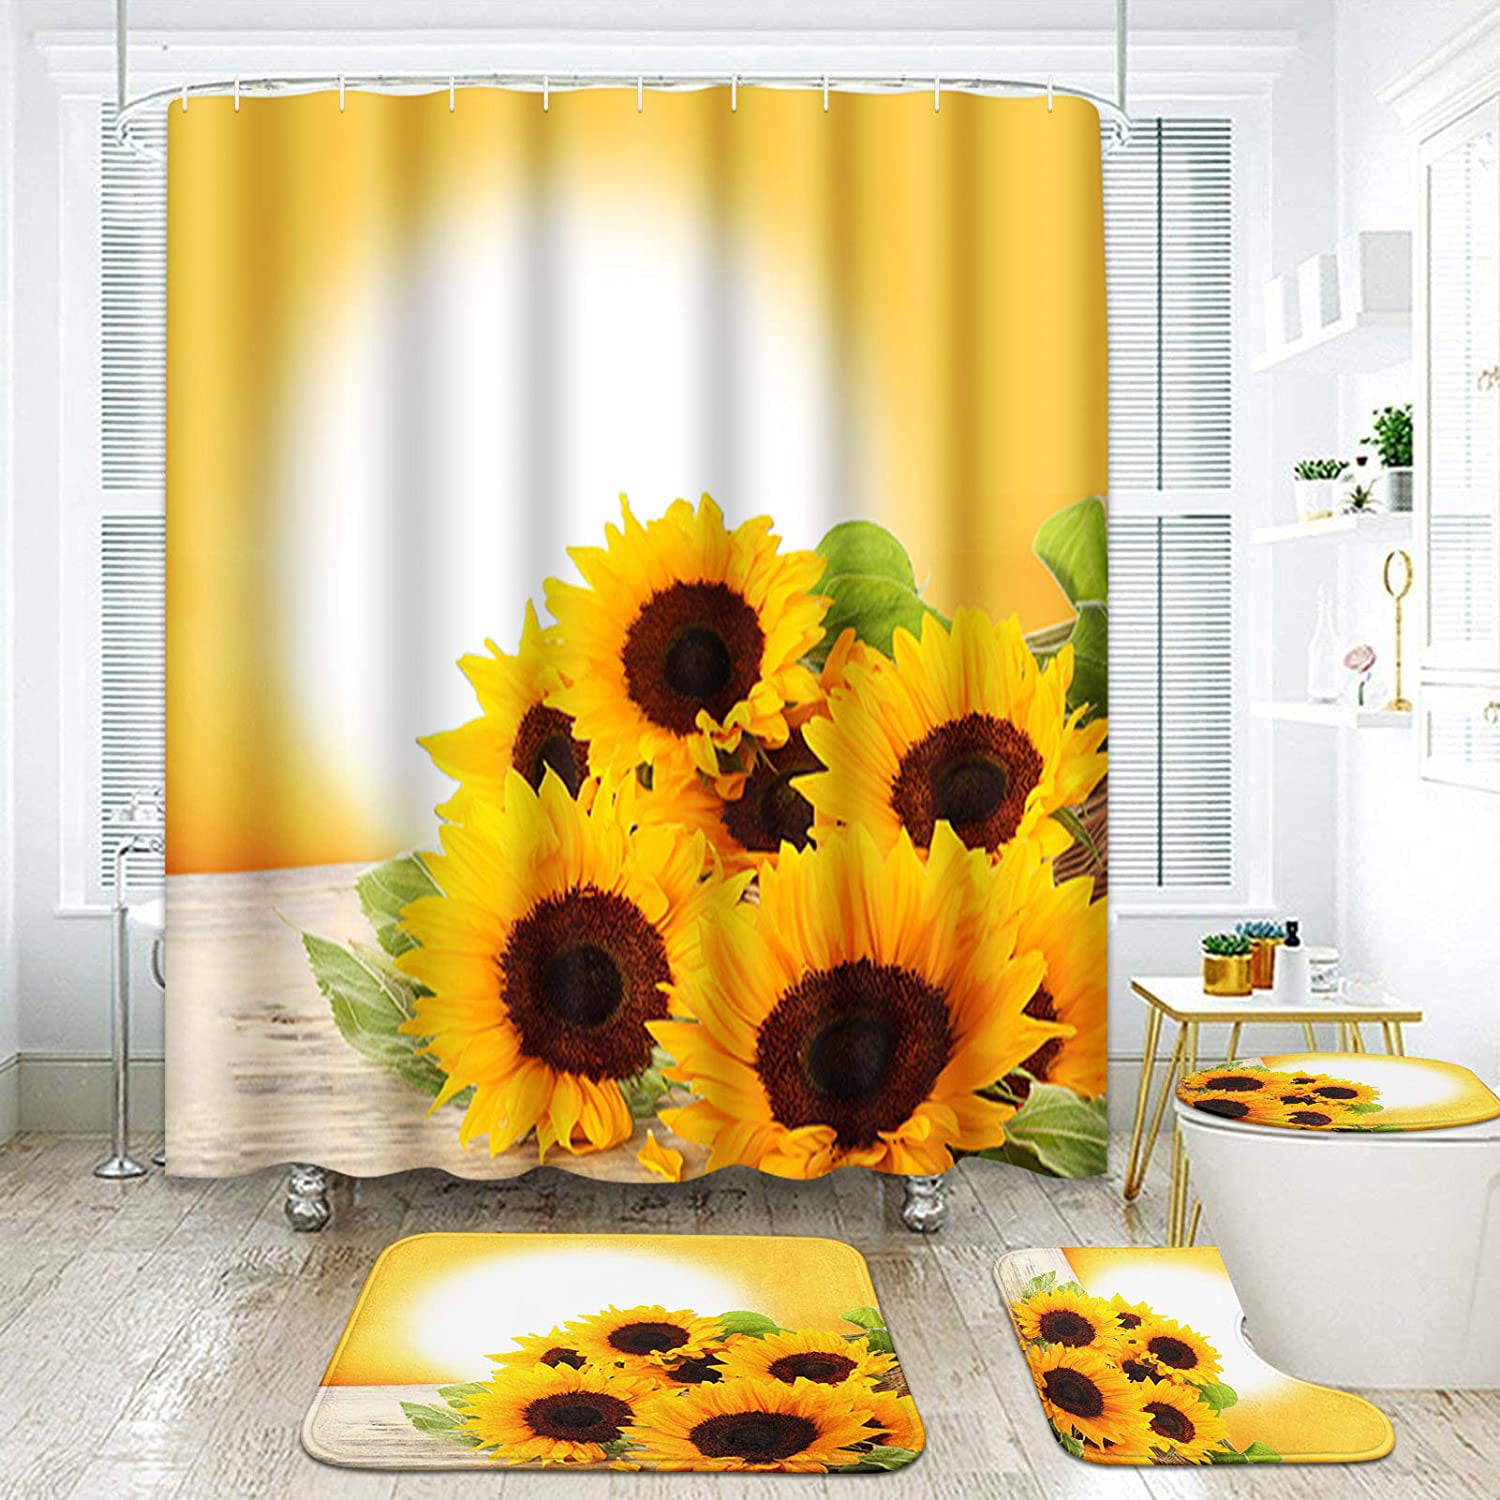 Golden Sunflower Shower Curtain Bath Mat Toilet Cover Rug Bathroom Decor 